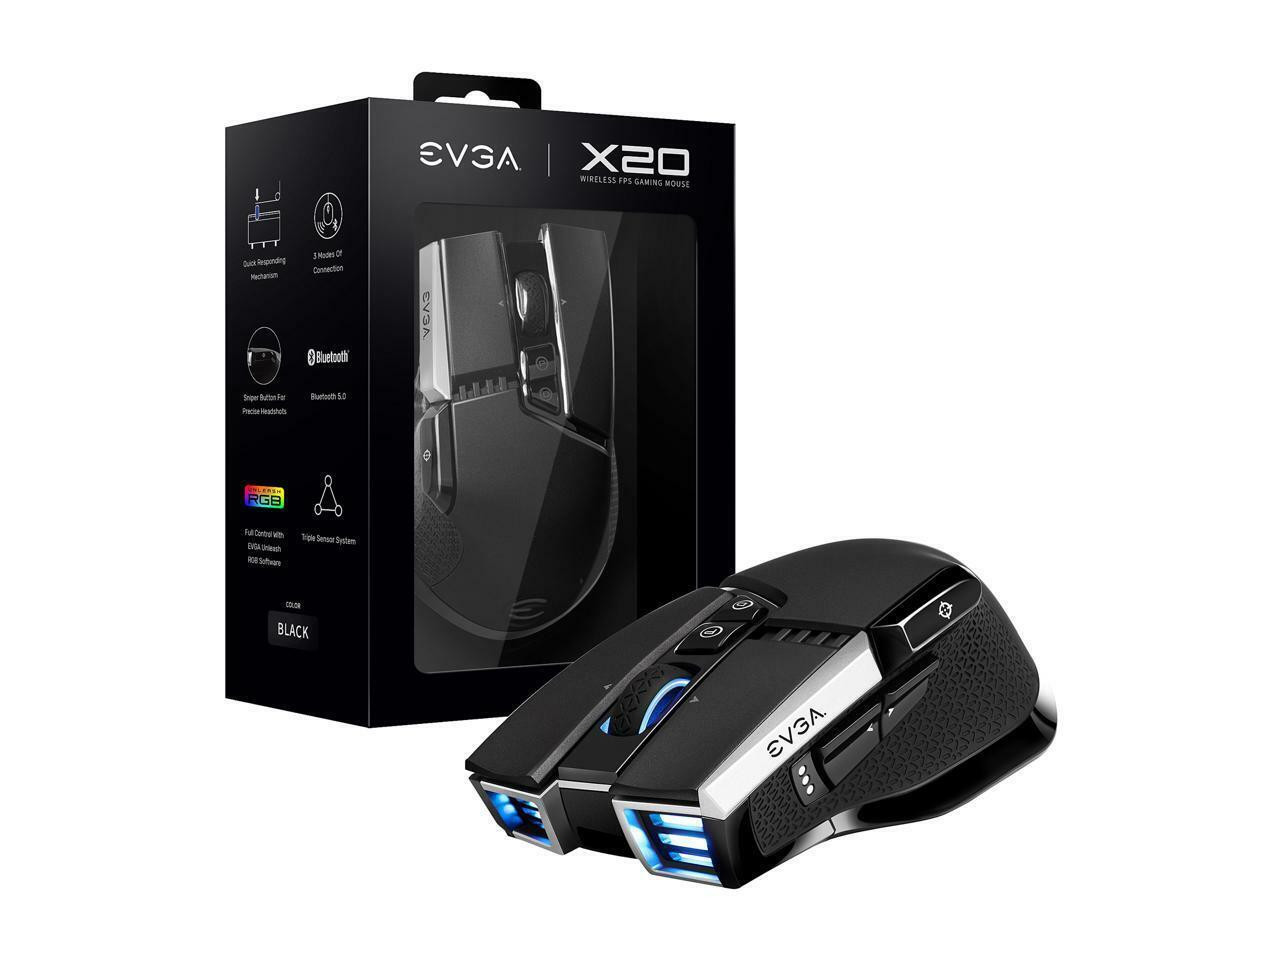 computadoras y laptops - EVGA X20 Gaming Mouse Wireless